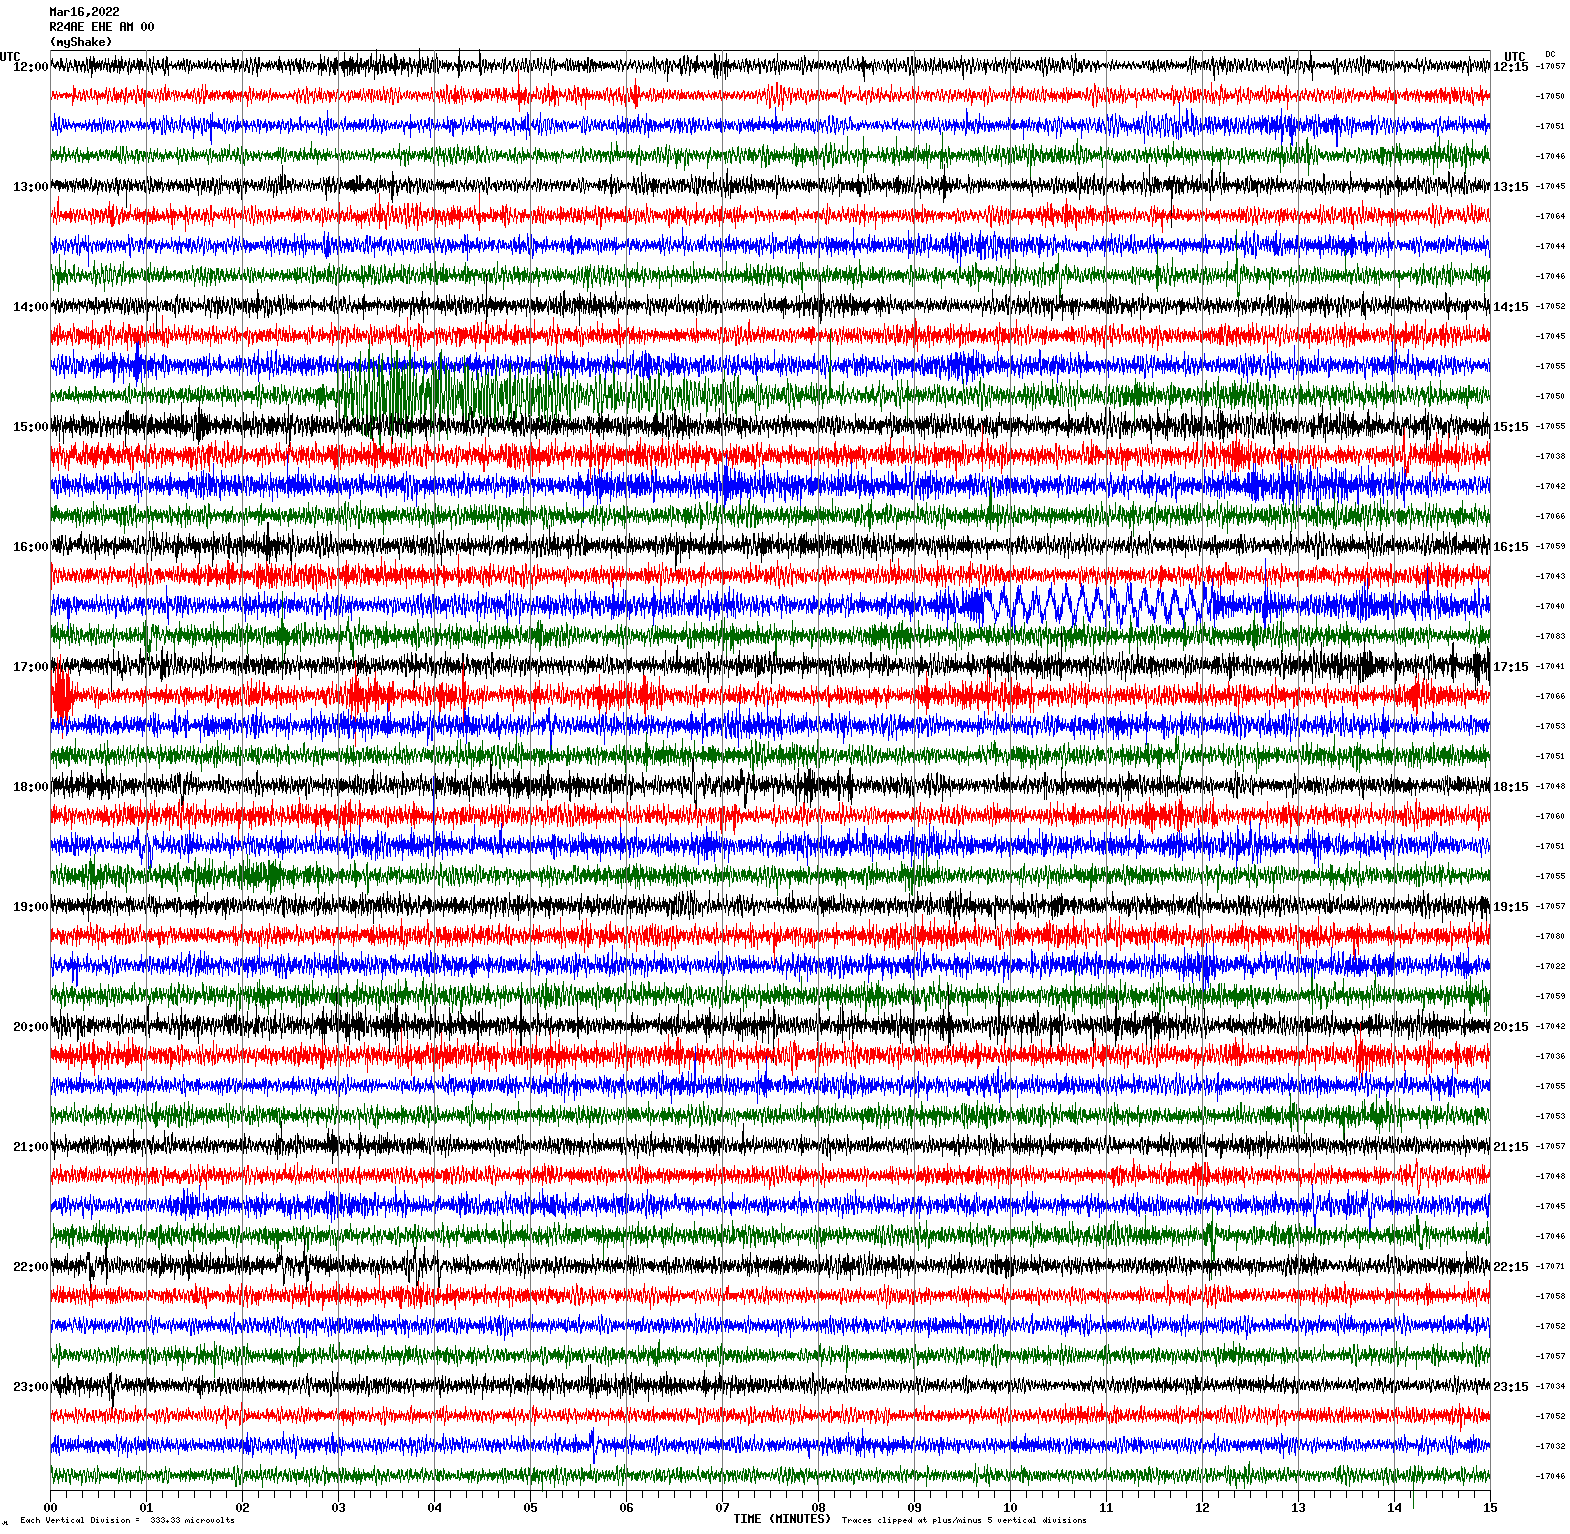 /seismic-data/R24AE/R24AE_EHE_AM_00.2022031612.gif